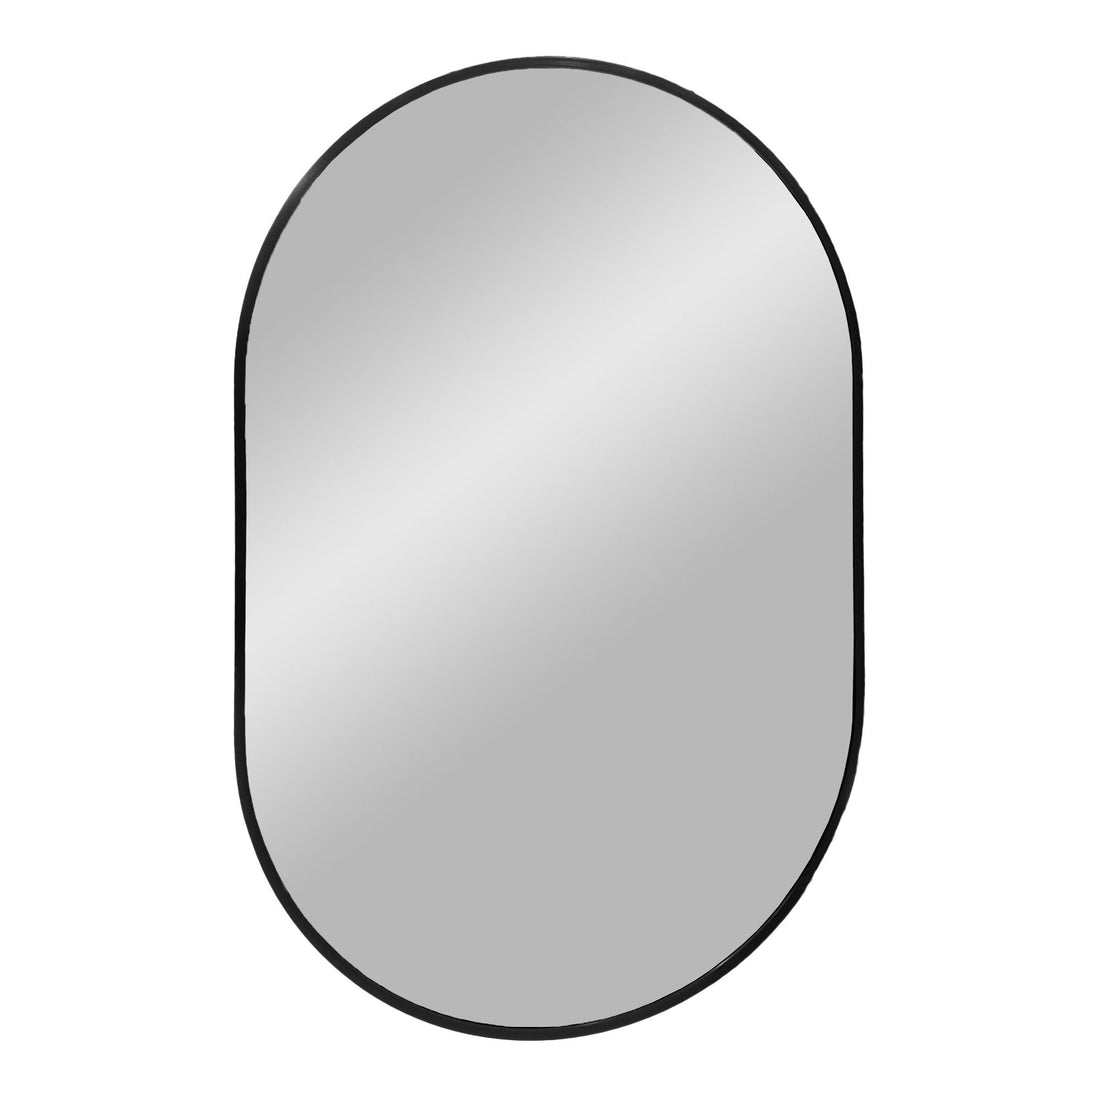 Madrid Mirror - Spiegel im Aluminium, schwarz, 50 x 80 cm - 1 - PCs